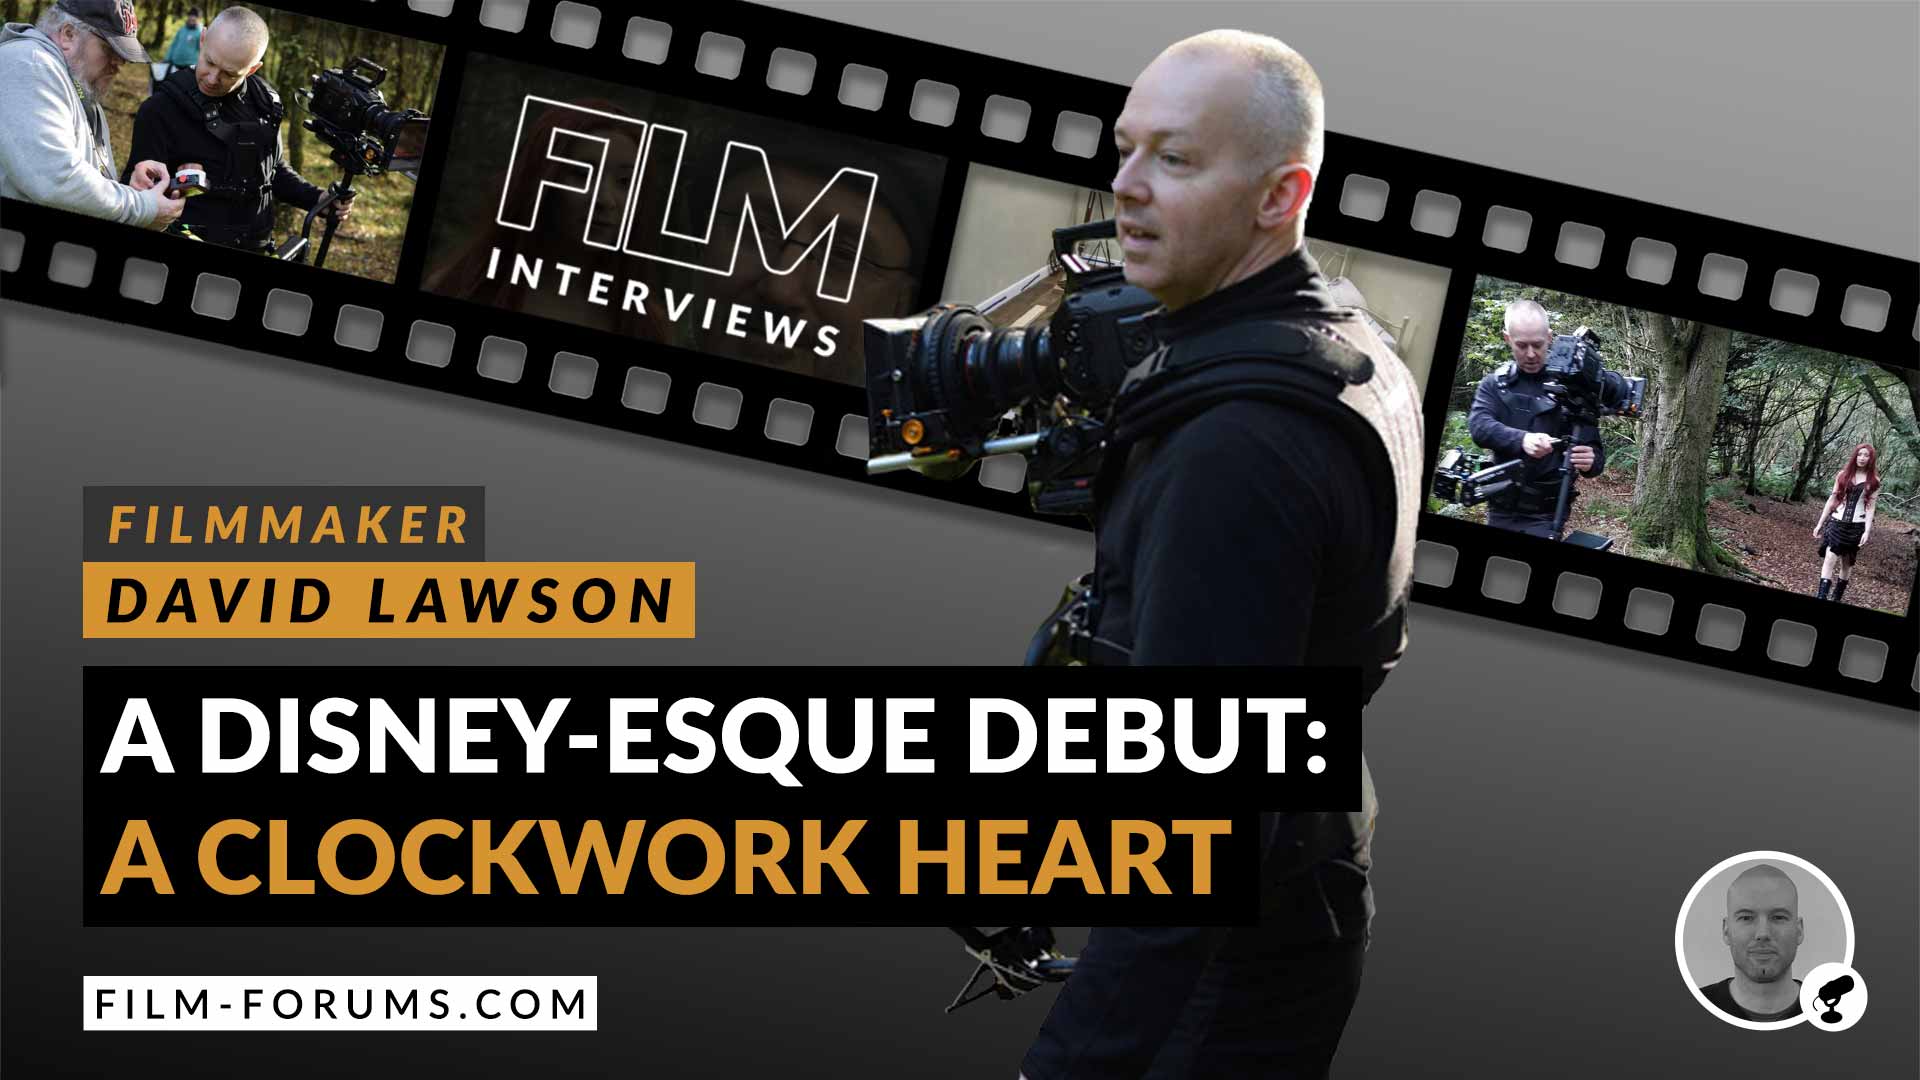 David Lawson, director of A Clockwork Heart